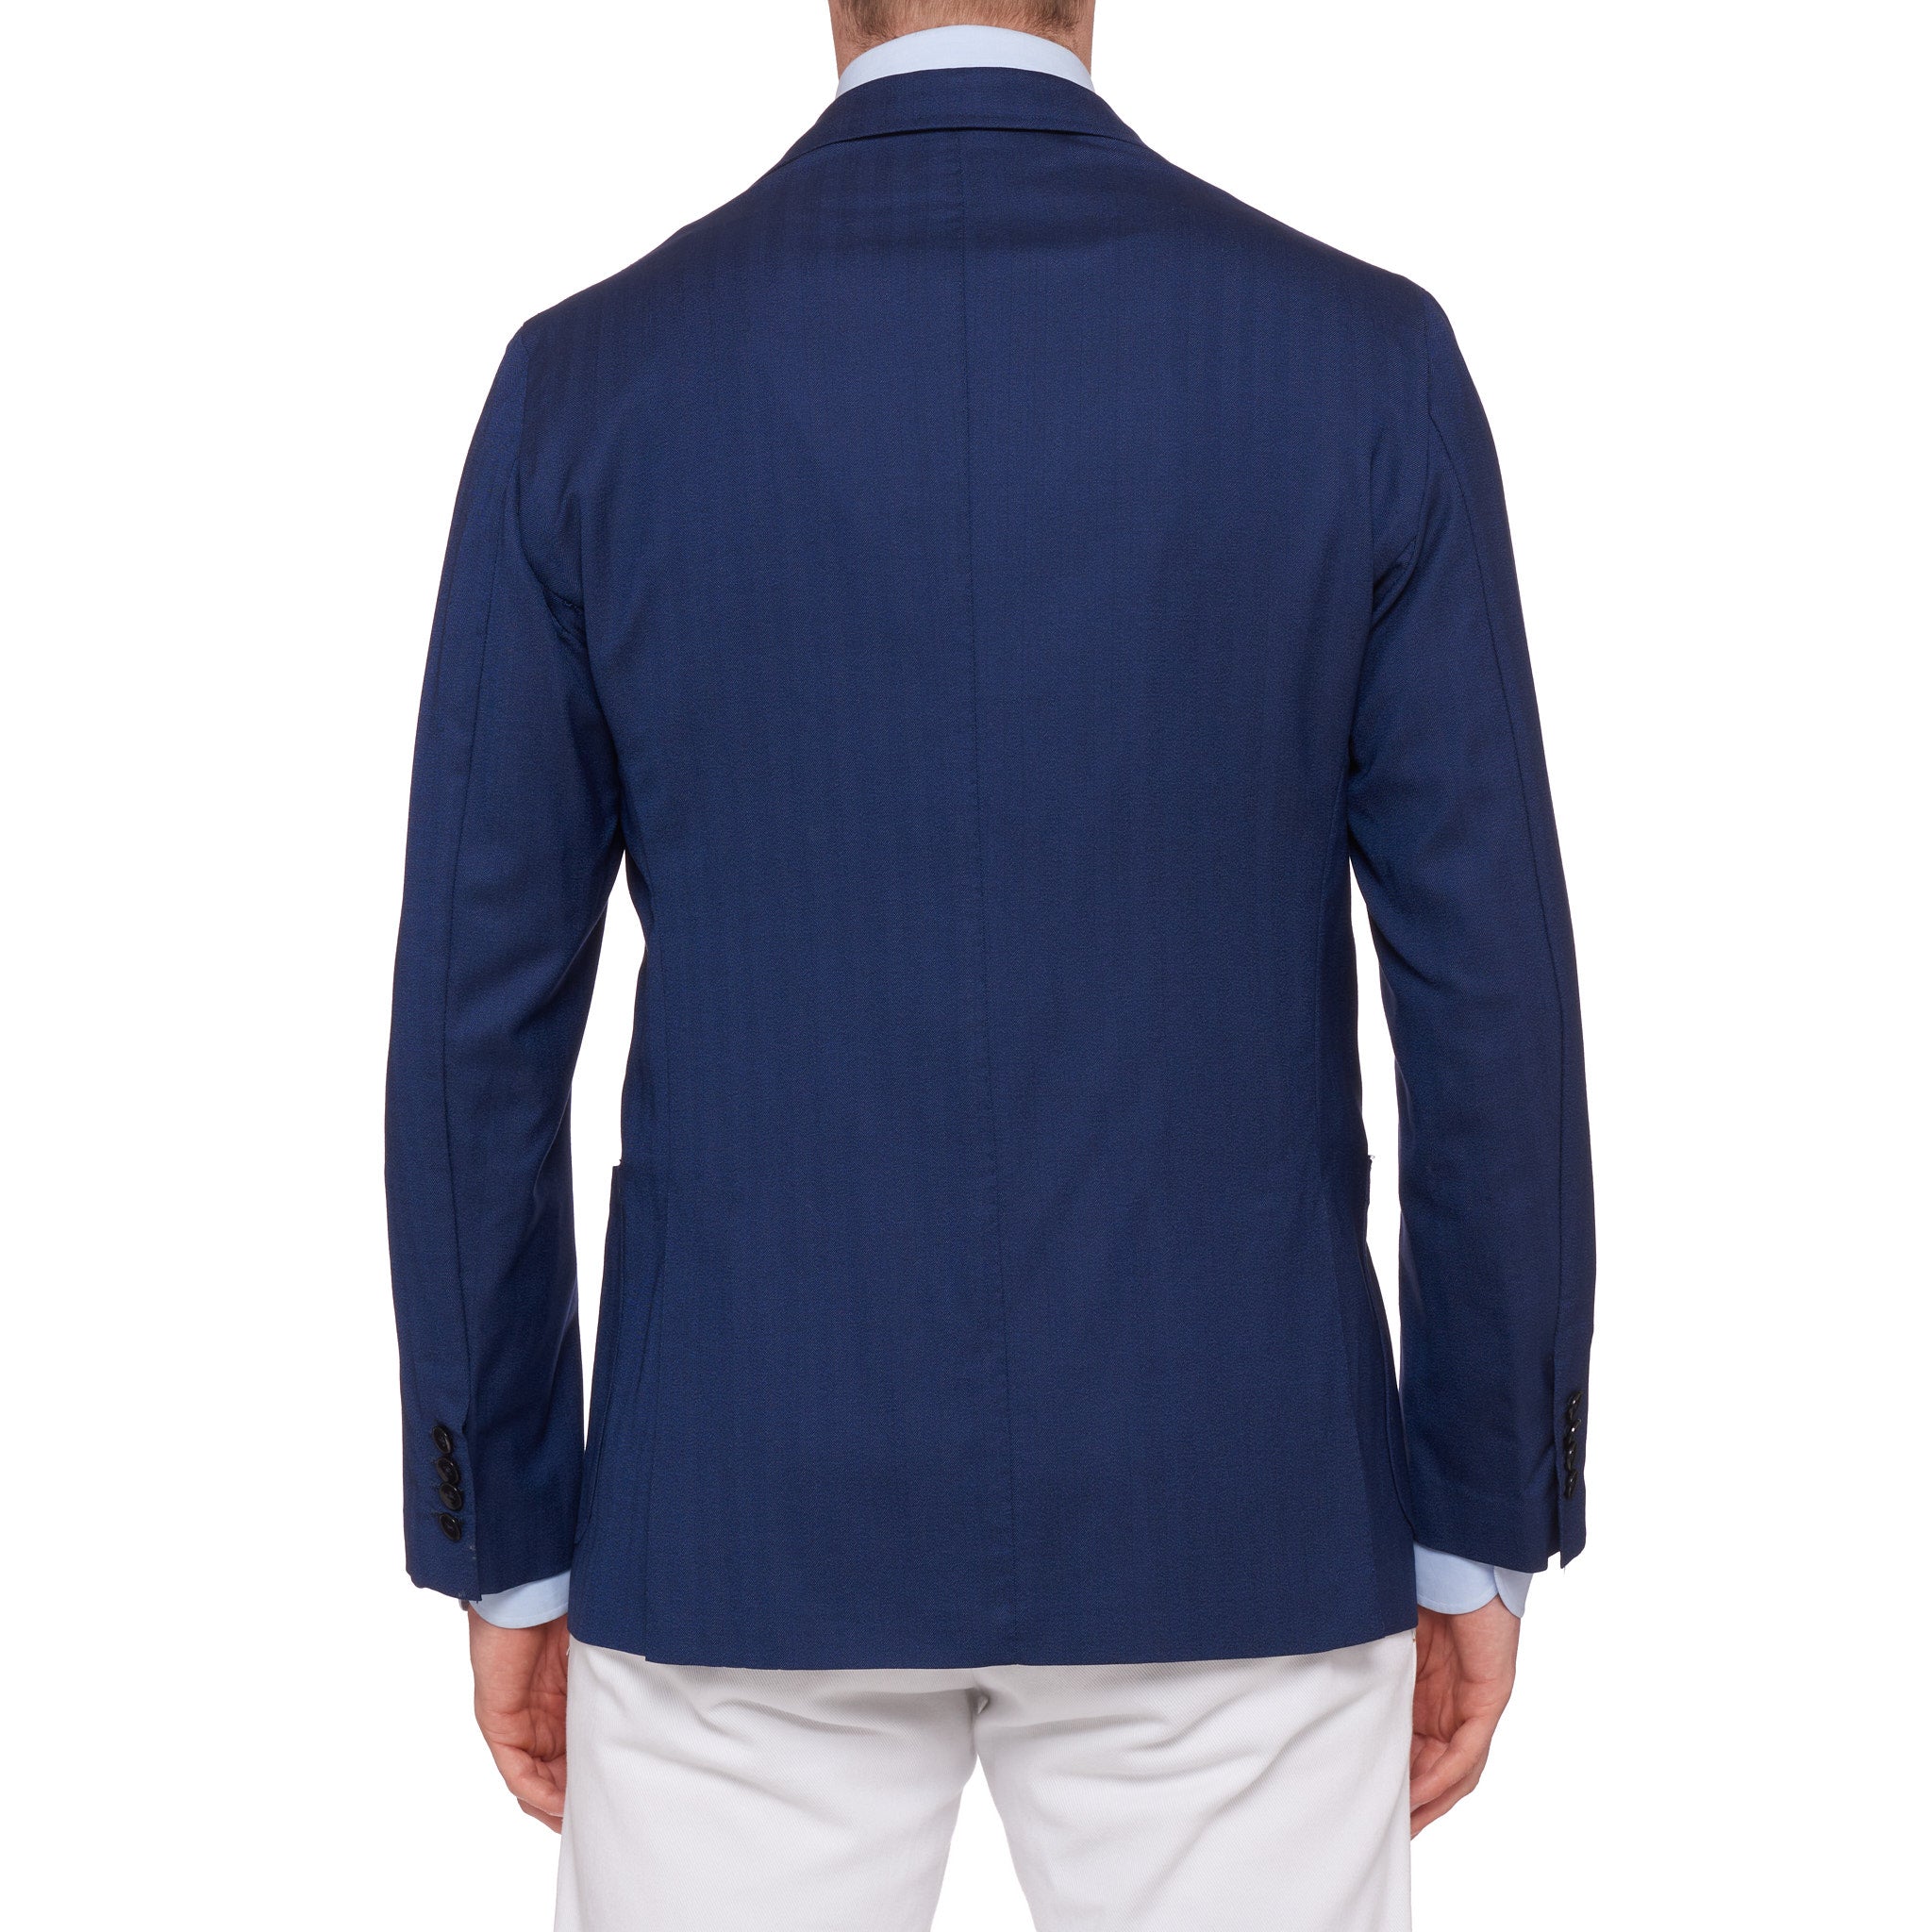 MICHELE NEGRI "Brillante" Blue Herringbone Wool-Silk Unconstructed Jacket 48/38 MICHELE NEGRI